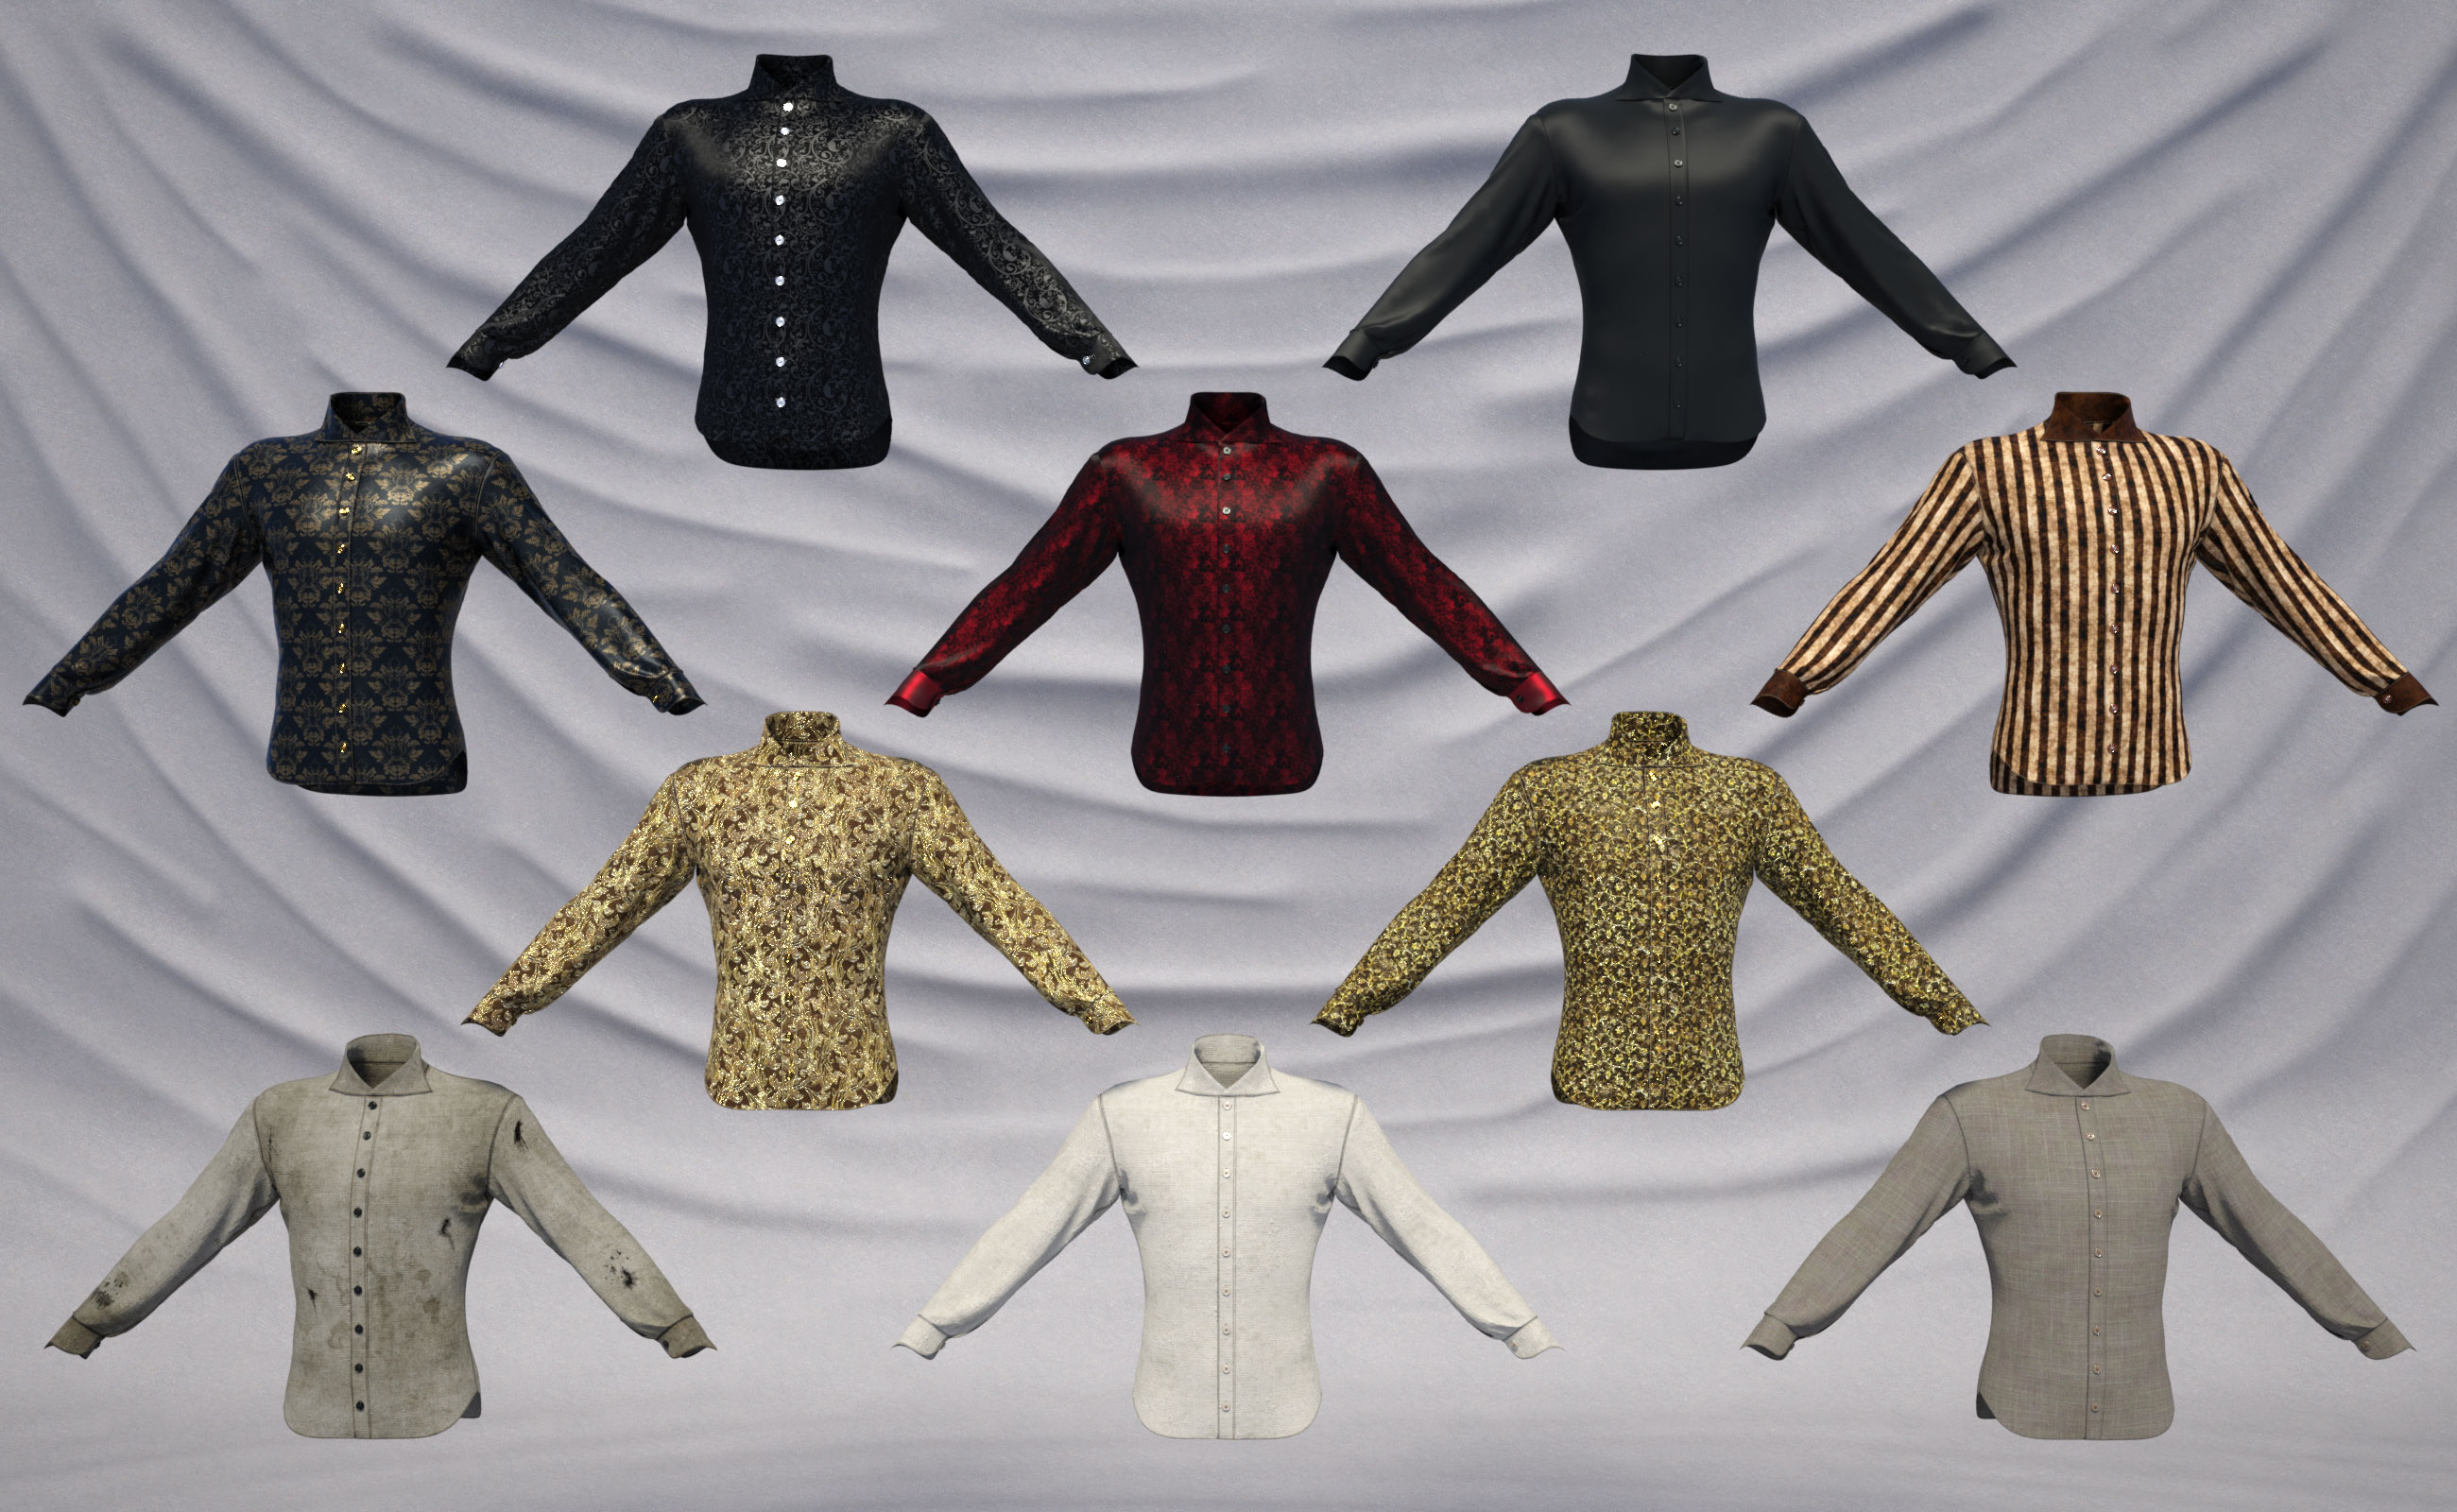 Victorian Gentleman's Evening Dress Textures by: The Alchemist, 3D Models by Daz 3D